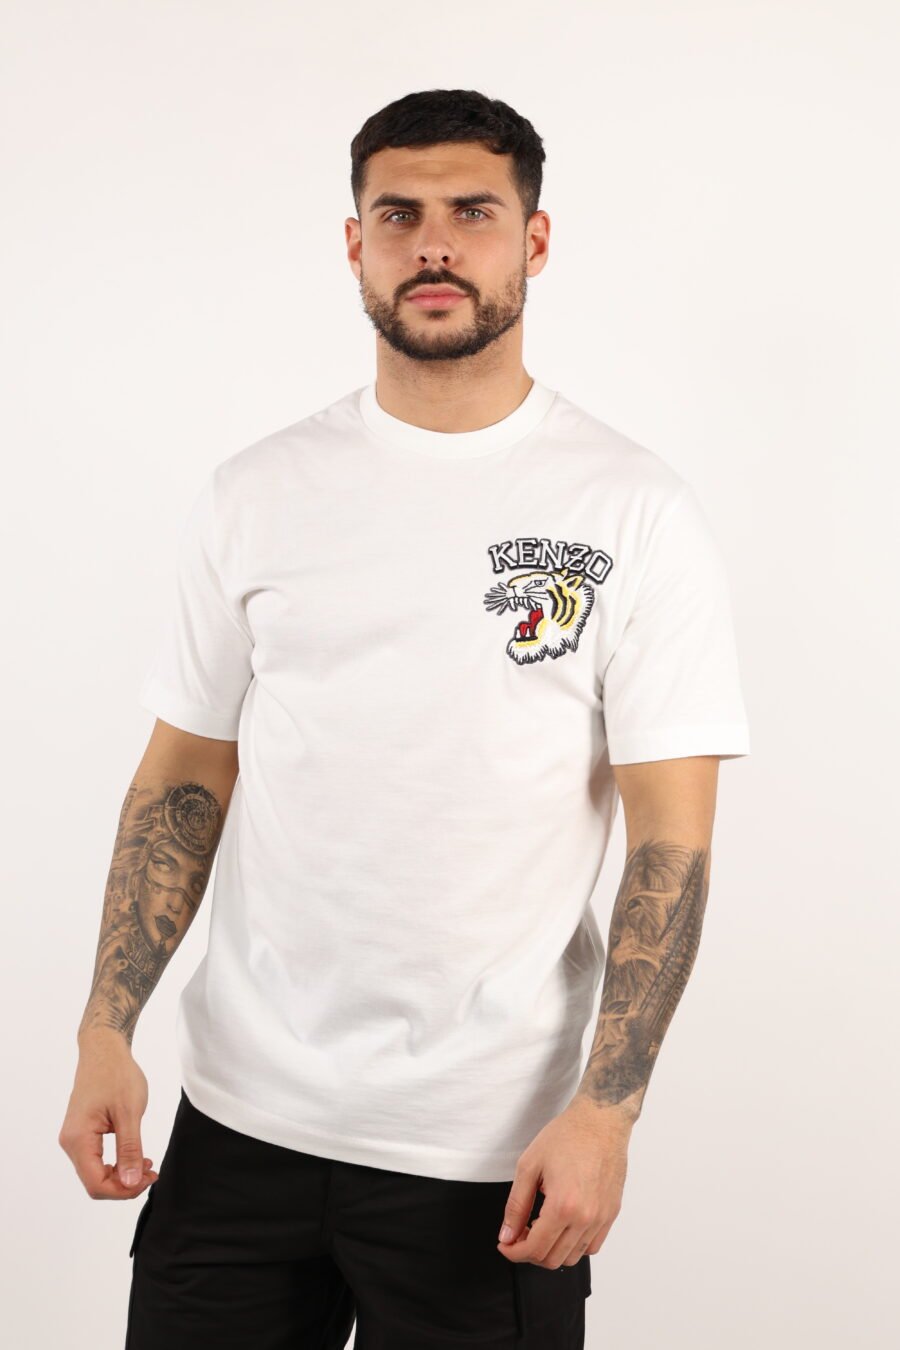 Camiseta blanca "oversize" logo pequeño tigre relieve - 109102 1